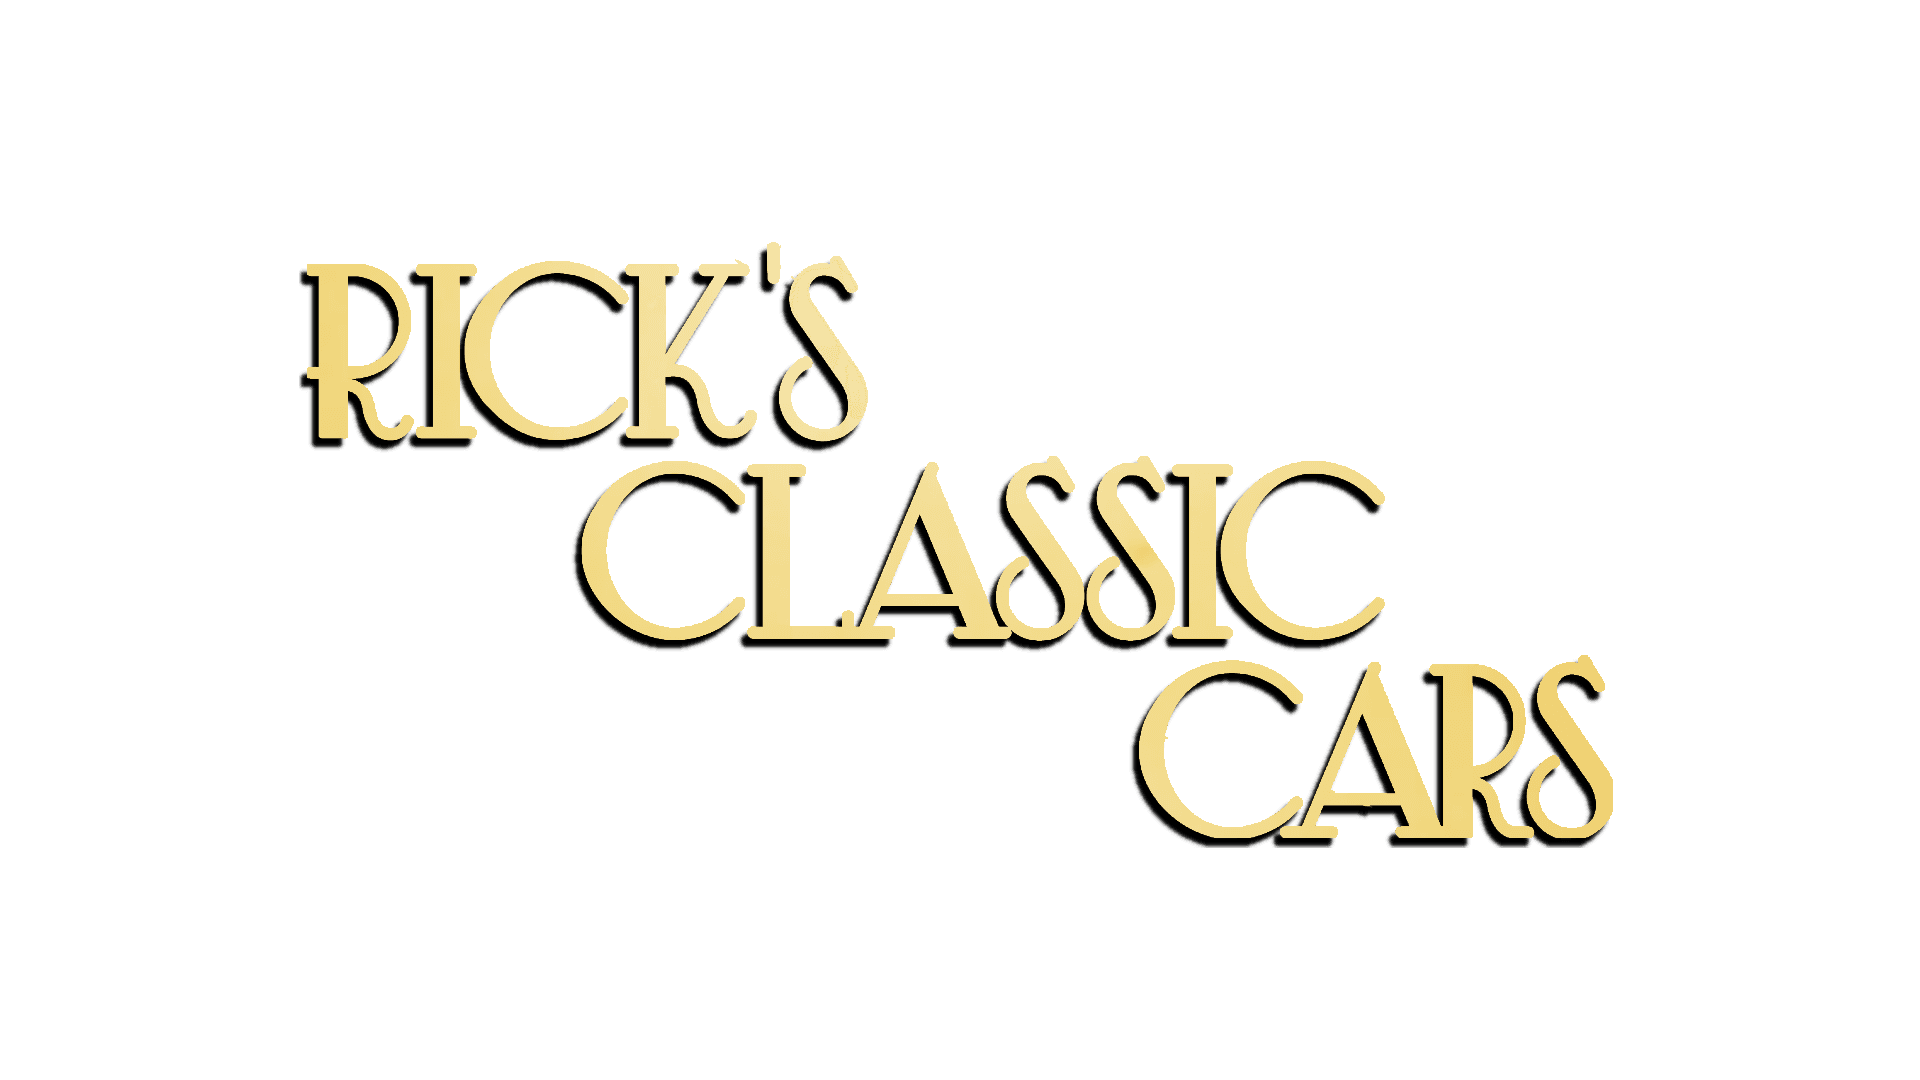 Ricks Classic Cars logo